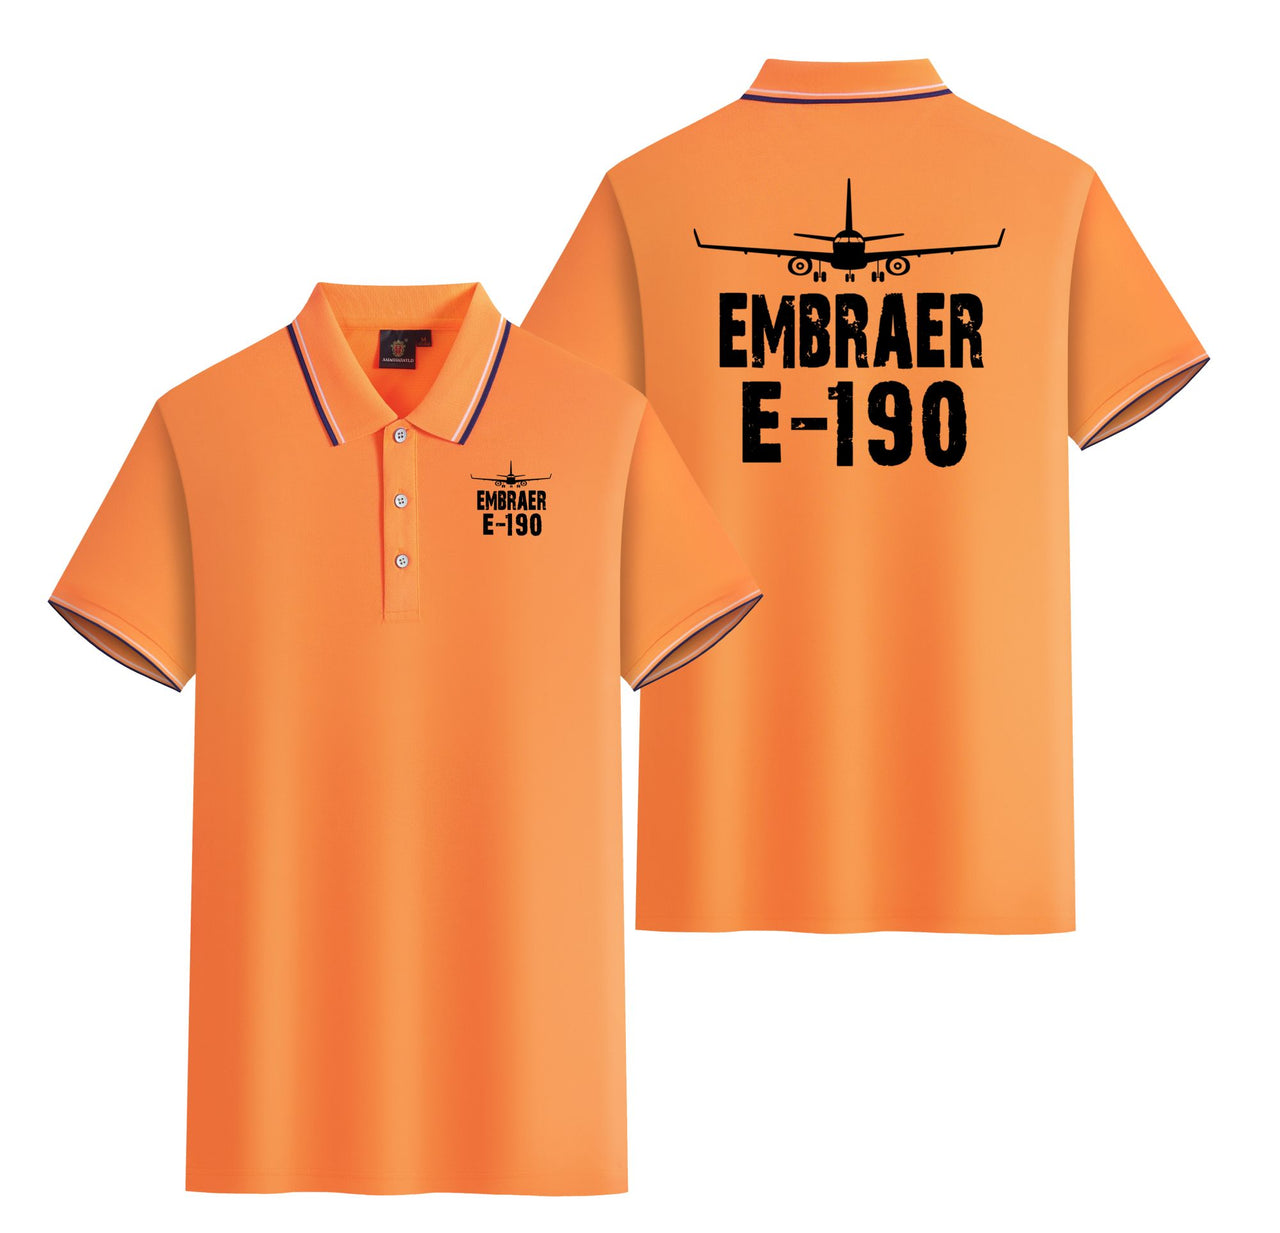 Embraer E-190 & Plane Designed Stylish Polo T-Shirts (Double-Side)